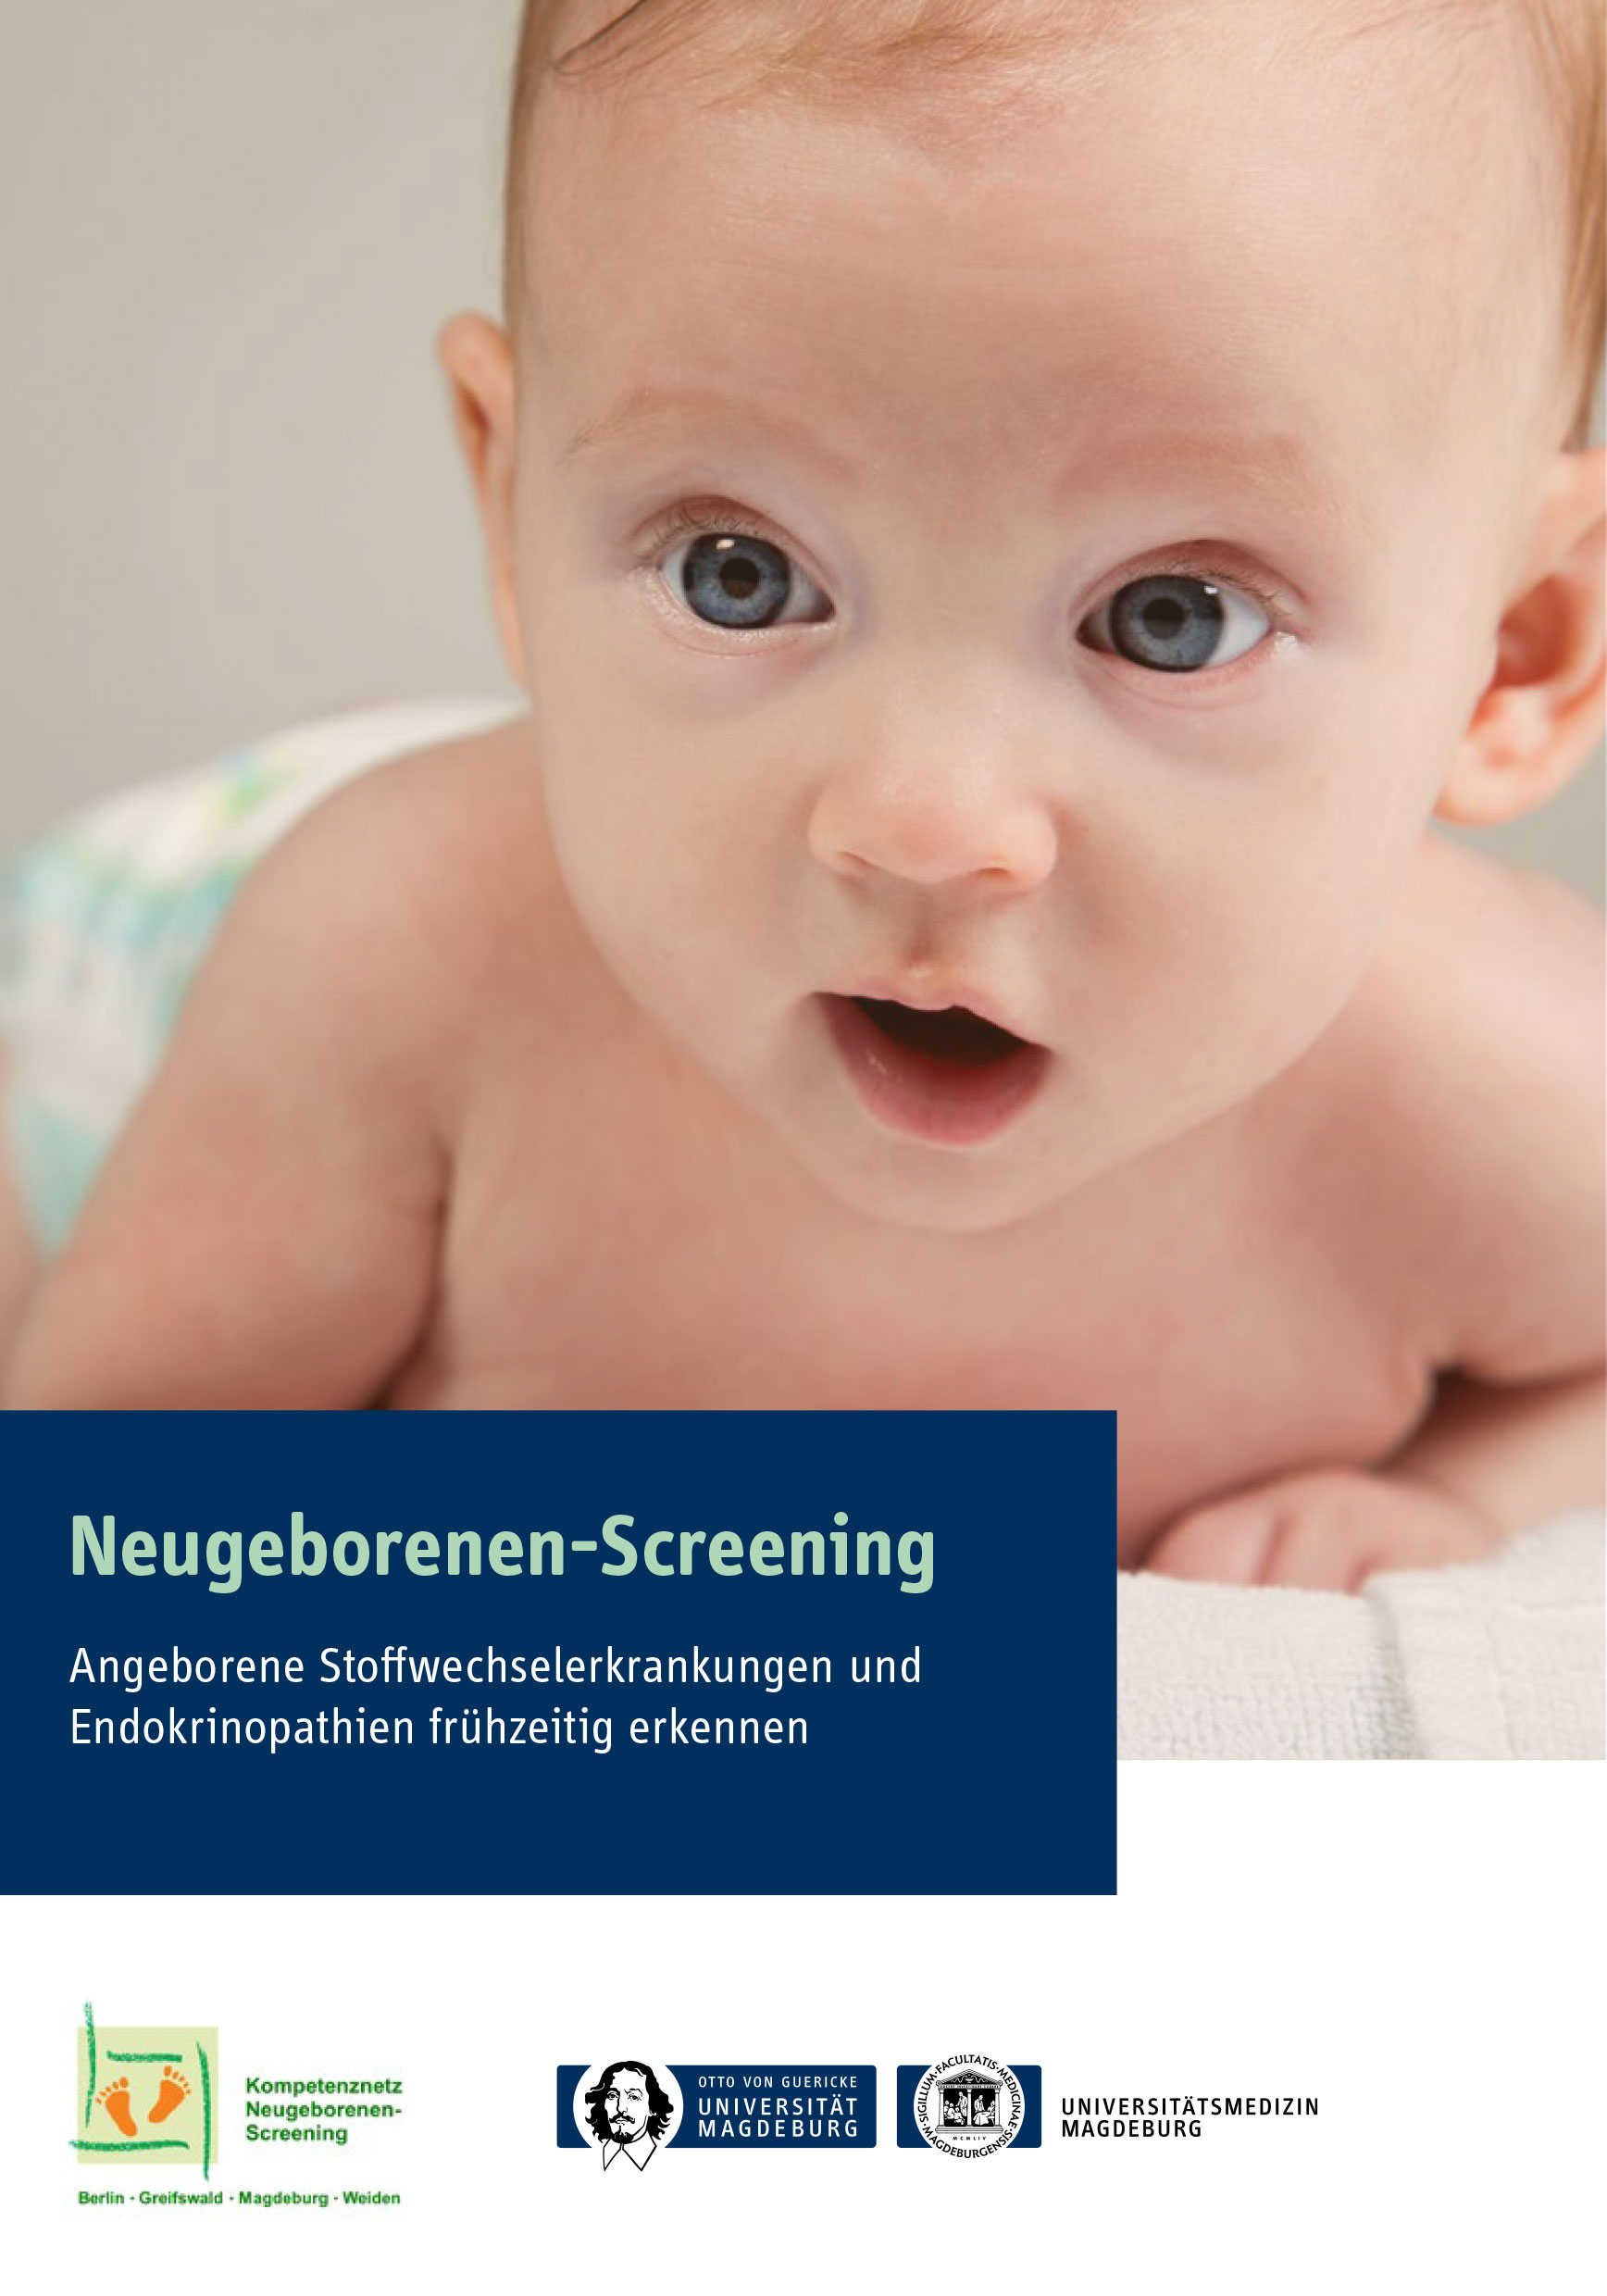 Neugeborenen-Screening